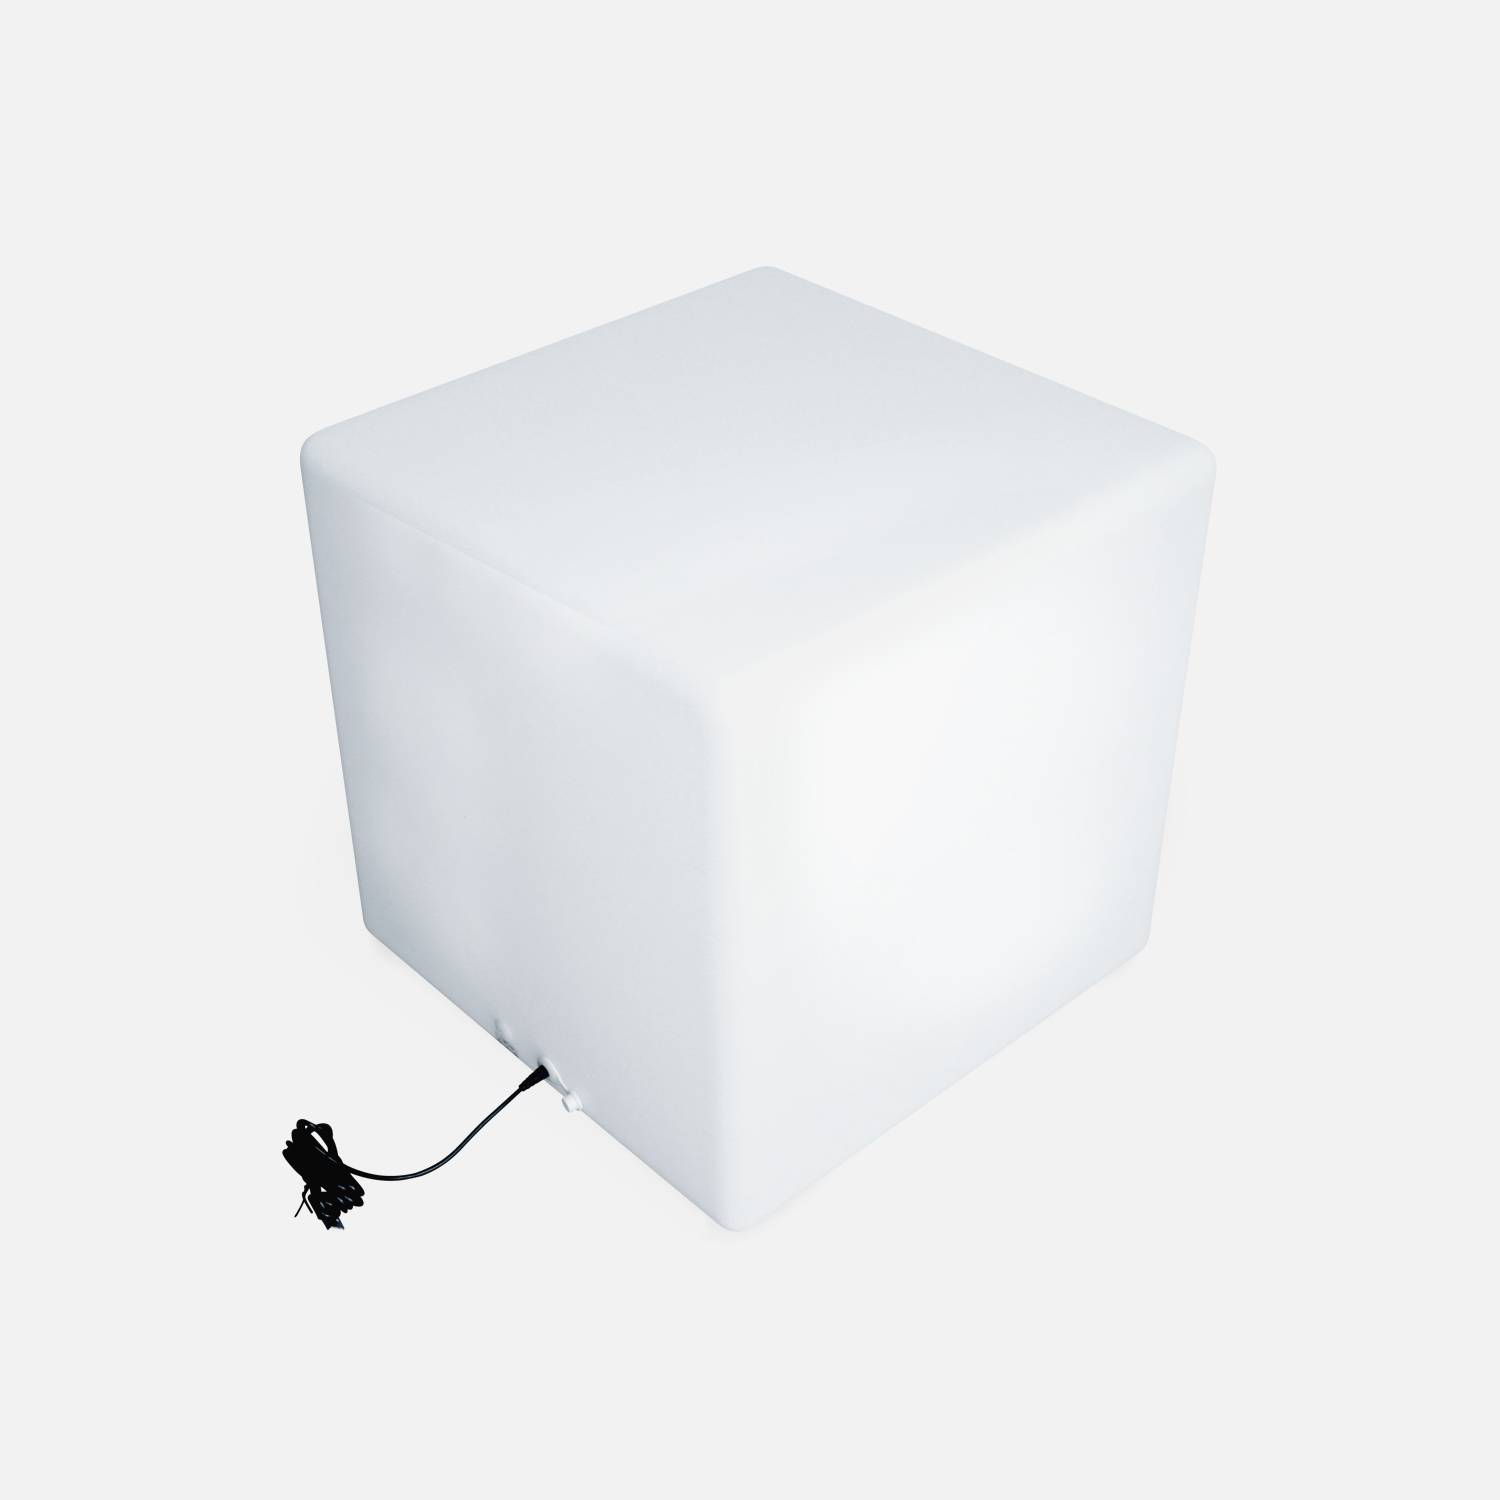 Cubo luminoso LED multicolor recargable sin cables para exterior  - 16 colores  - CUBO LED 40cm Photo4